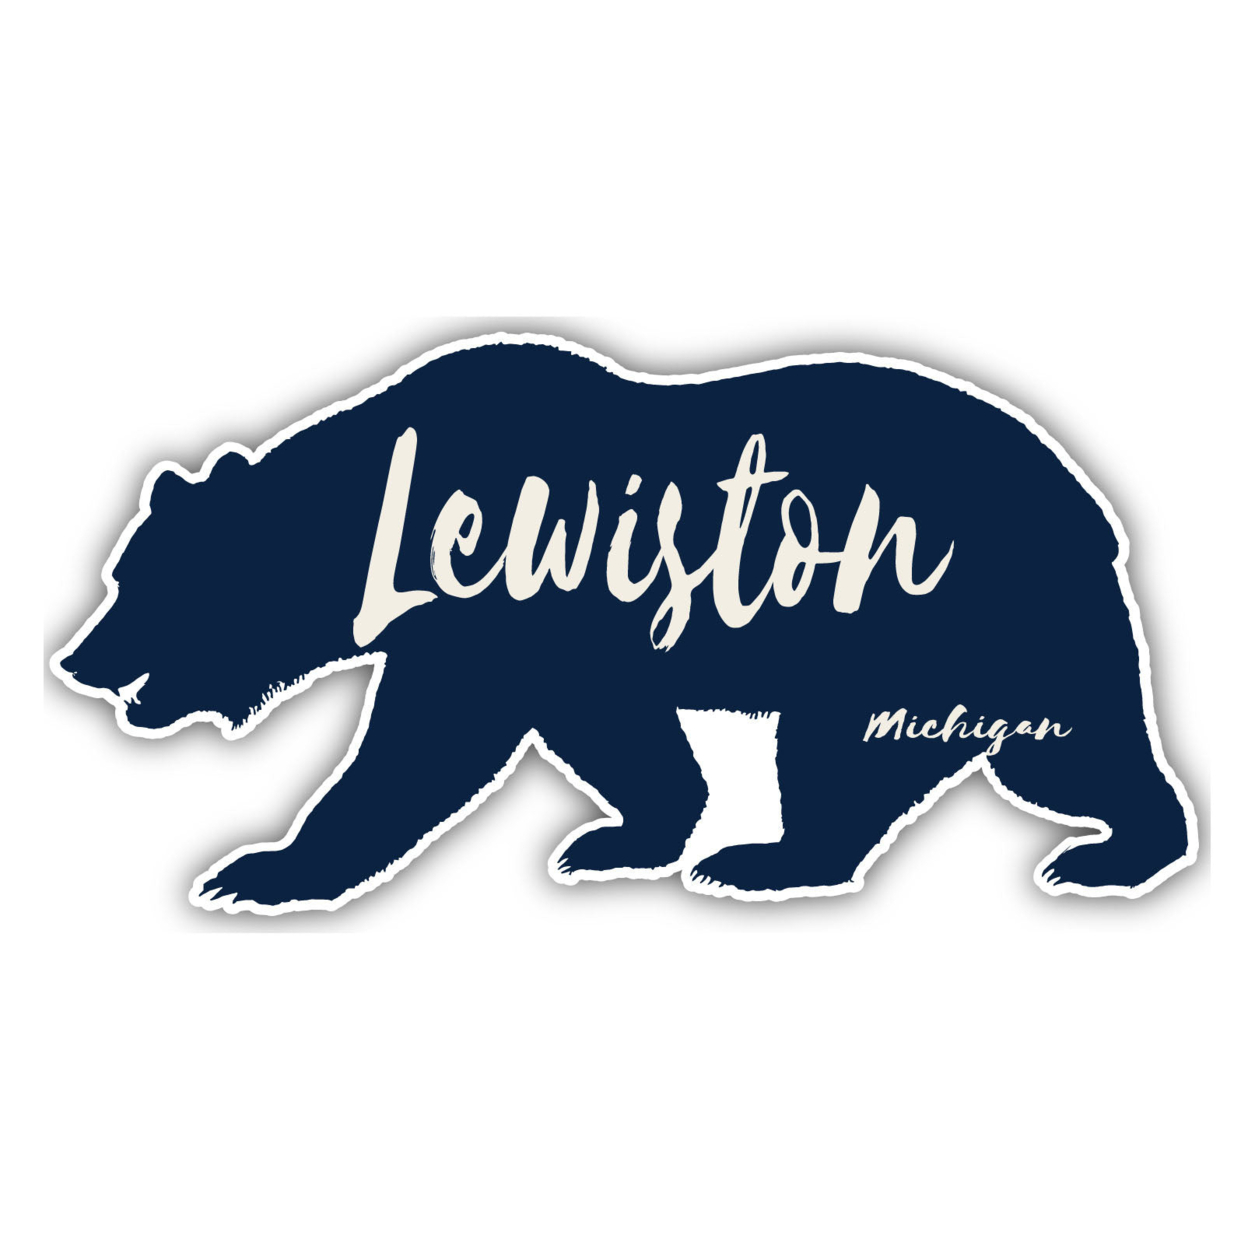 Lewiston Michigan Souvenir Decorative Stickers (Choose Theme And Size) - 4-Inch, Bear